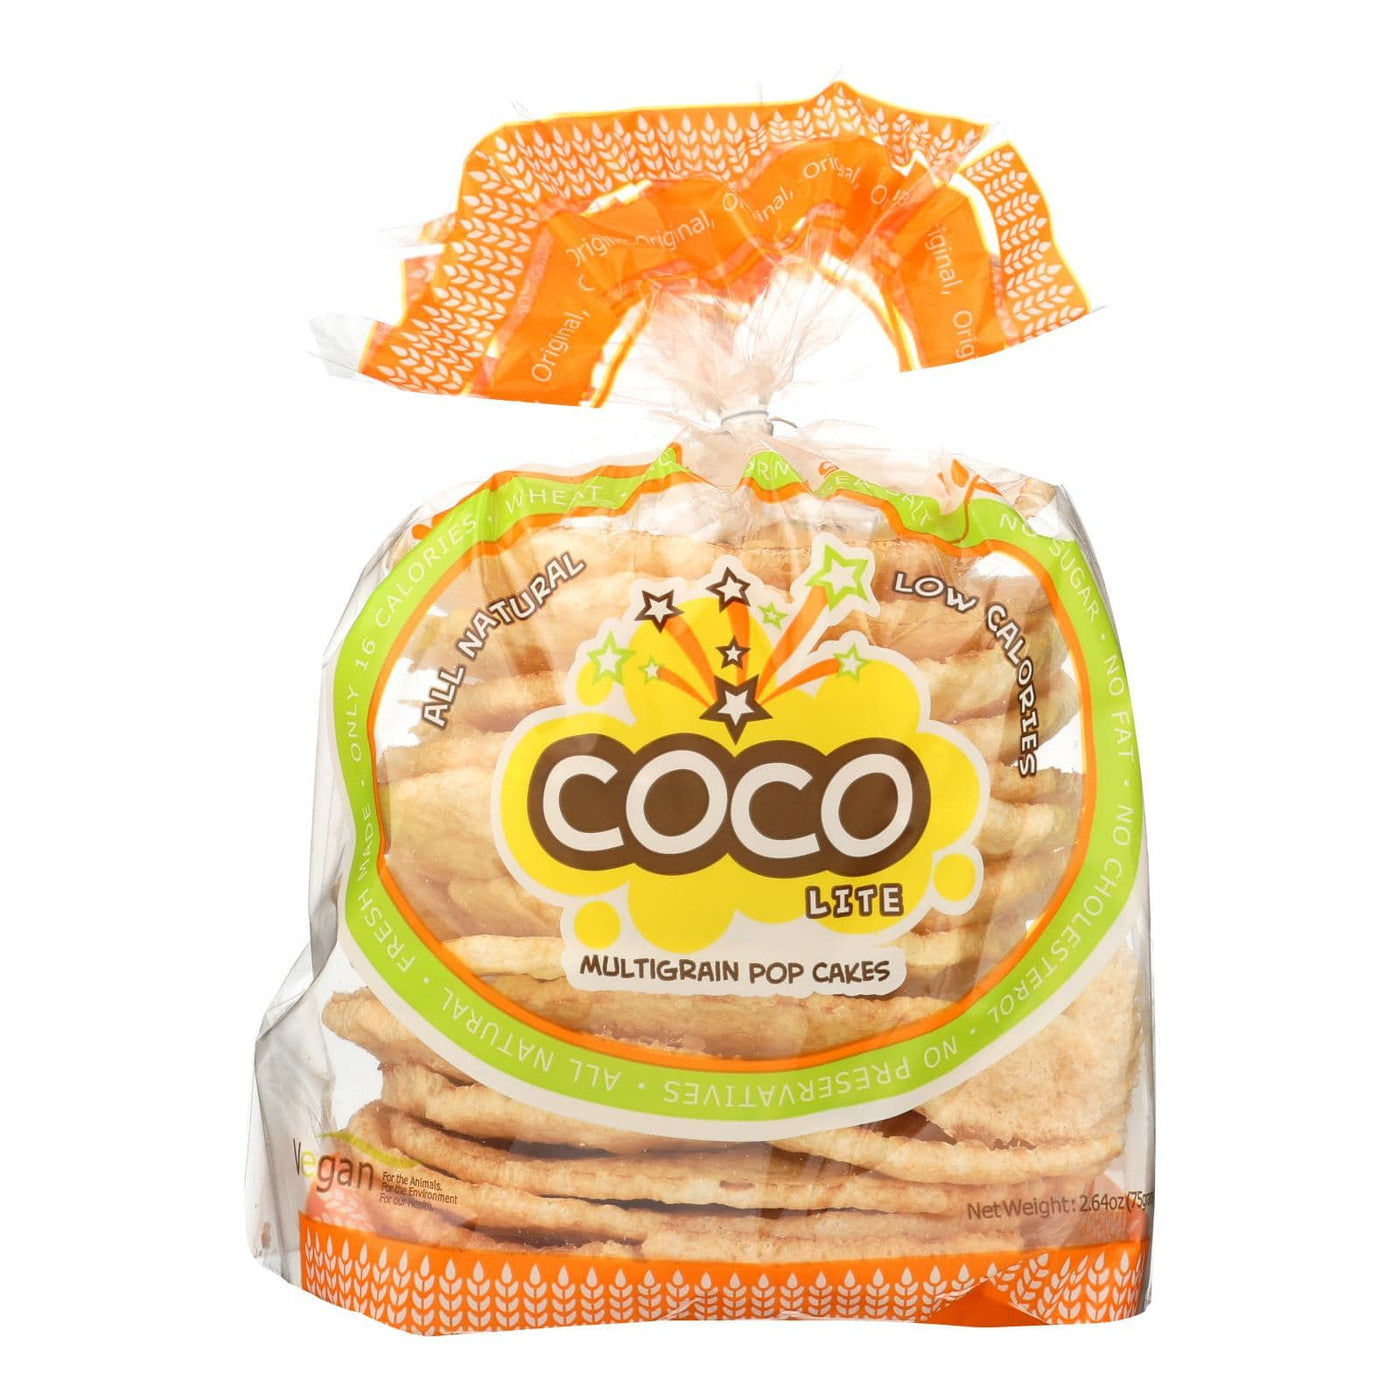 Buy Coco Lite Multigrain Pop Cakes Pop Cakes - Original - Case Of 12 - 2.64 Oz  at OnlyNaturals.us